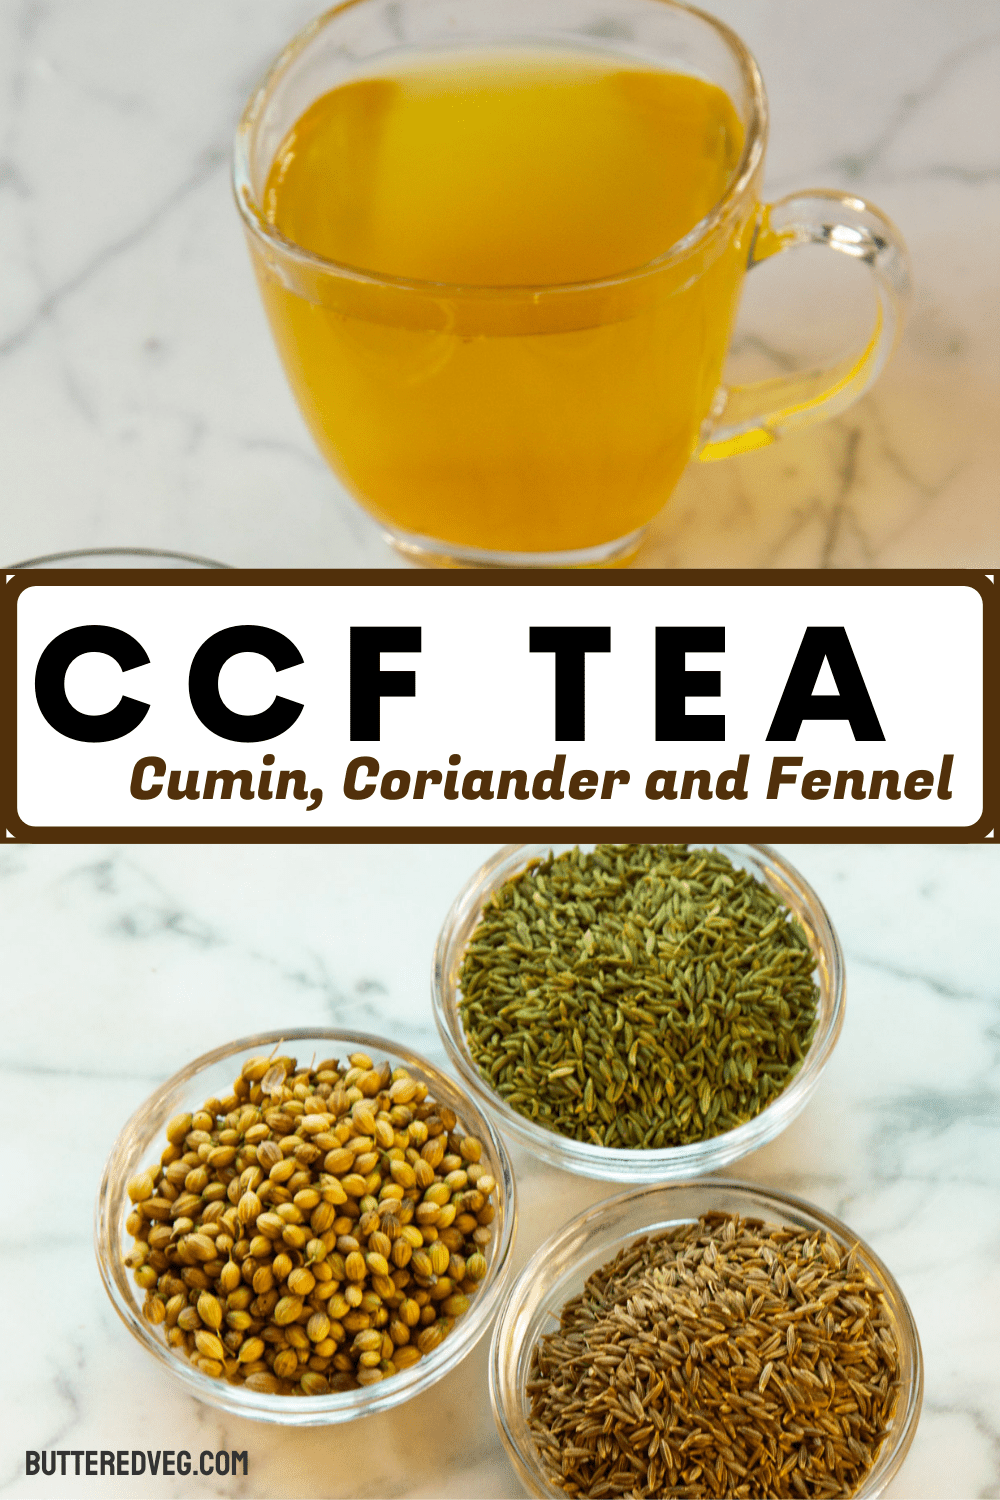 Digest & Detox With CCF Tea (Cumin, Coriander & Fennel)